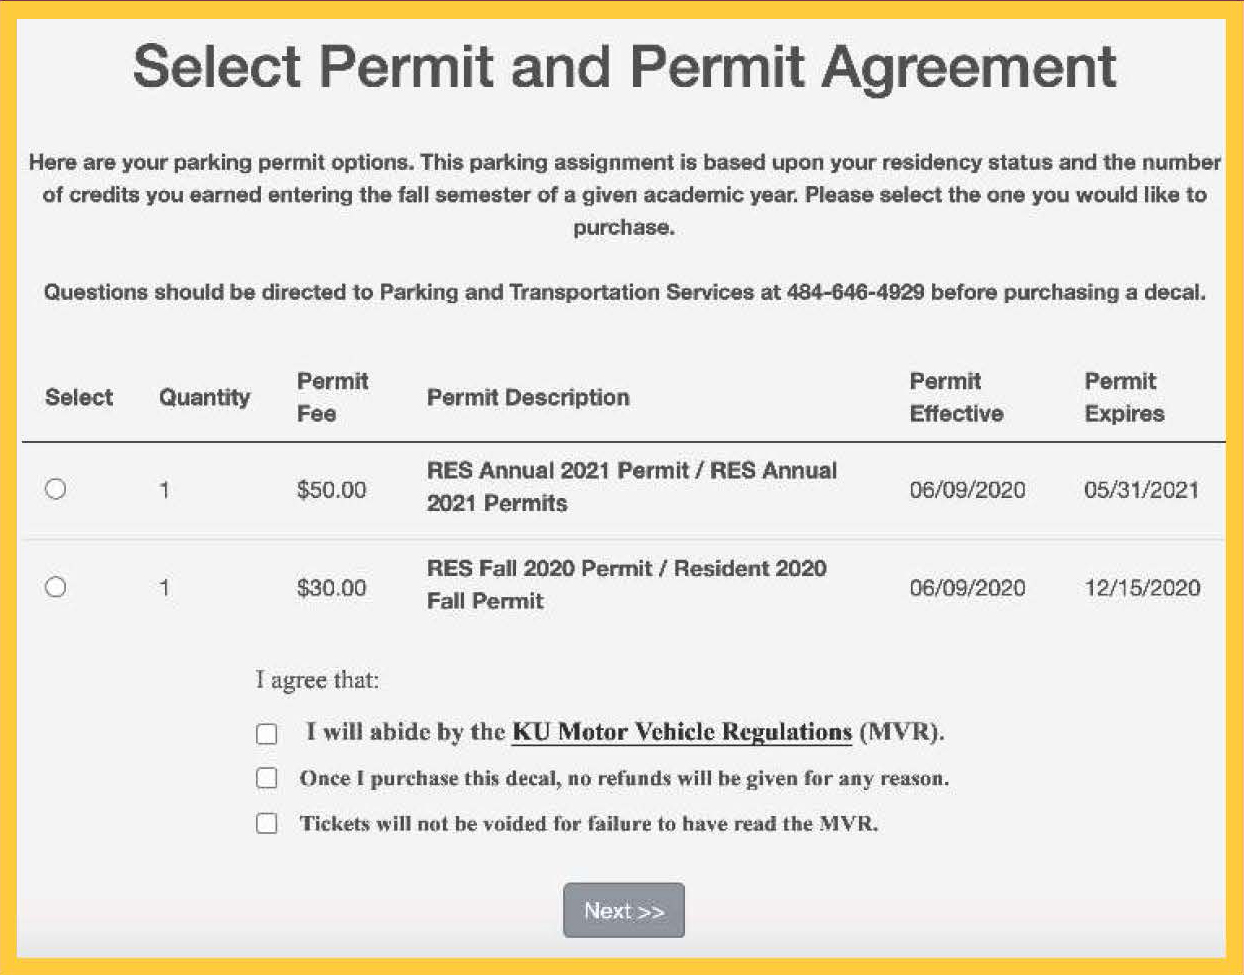 Permit agreement form